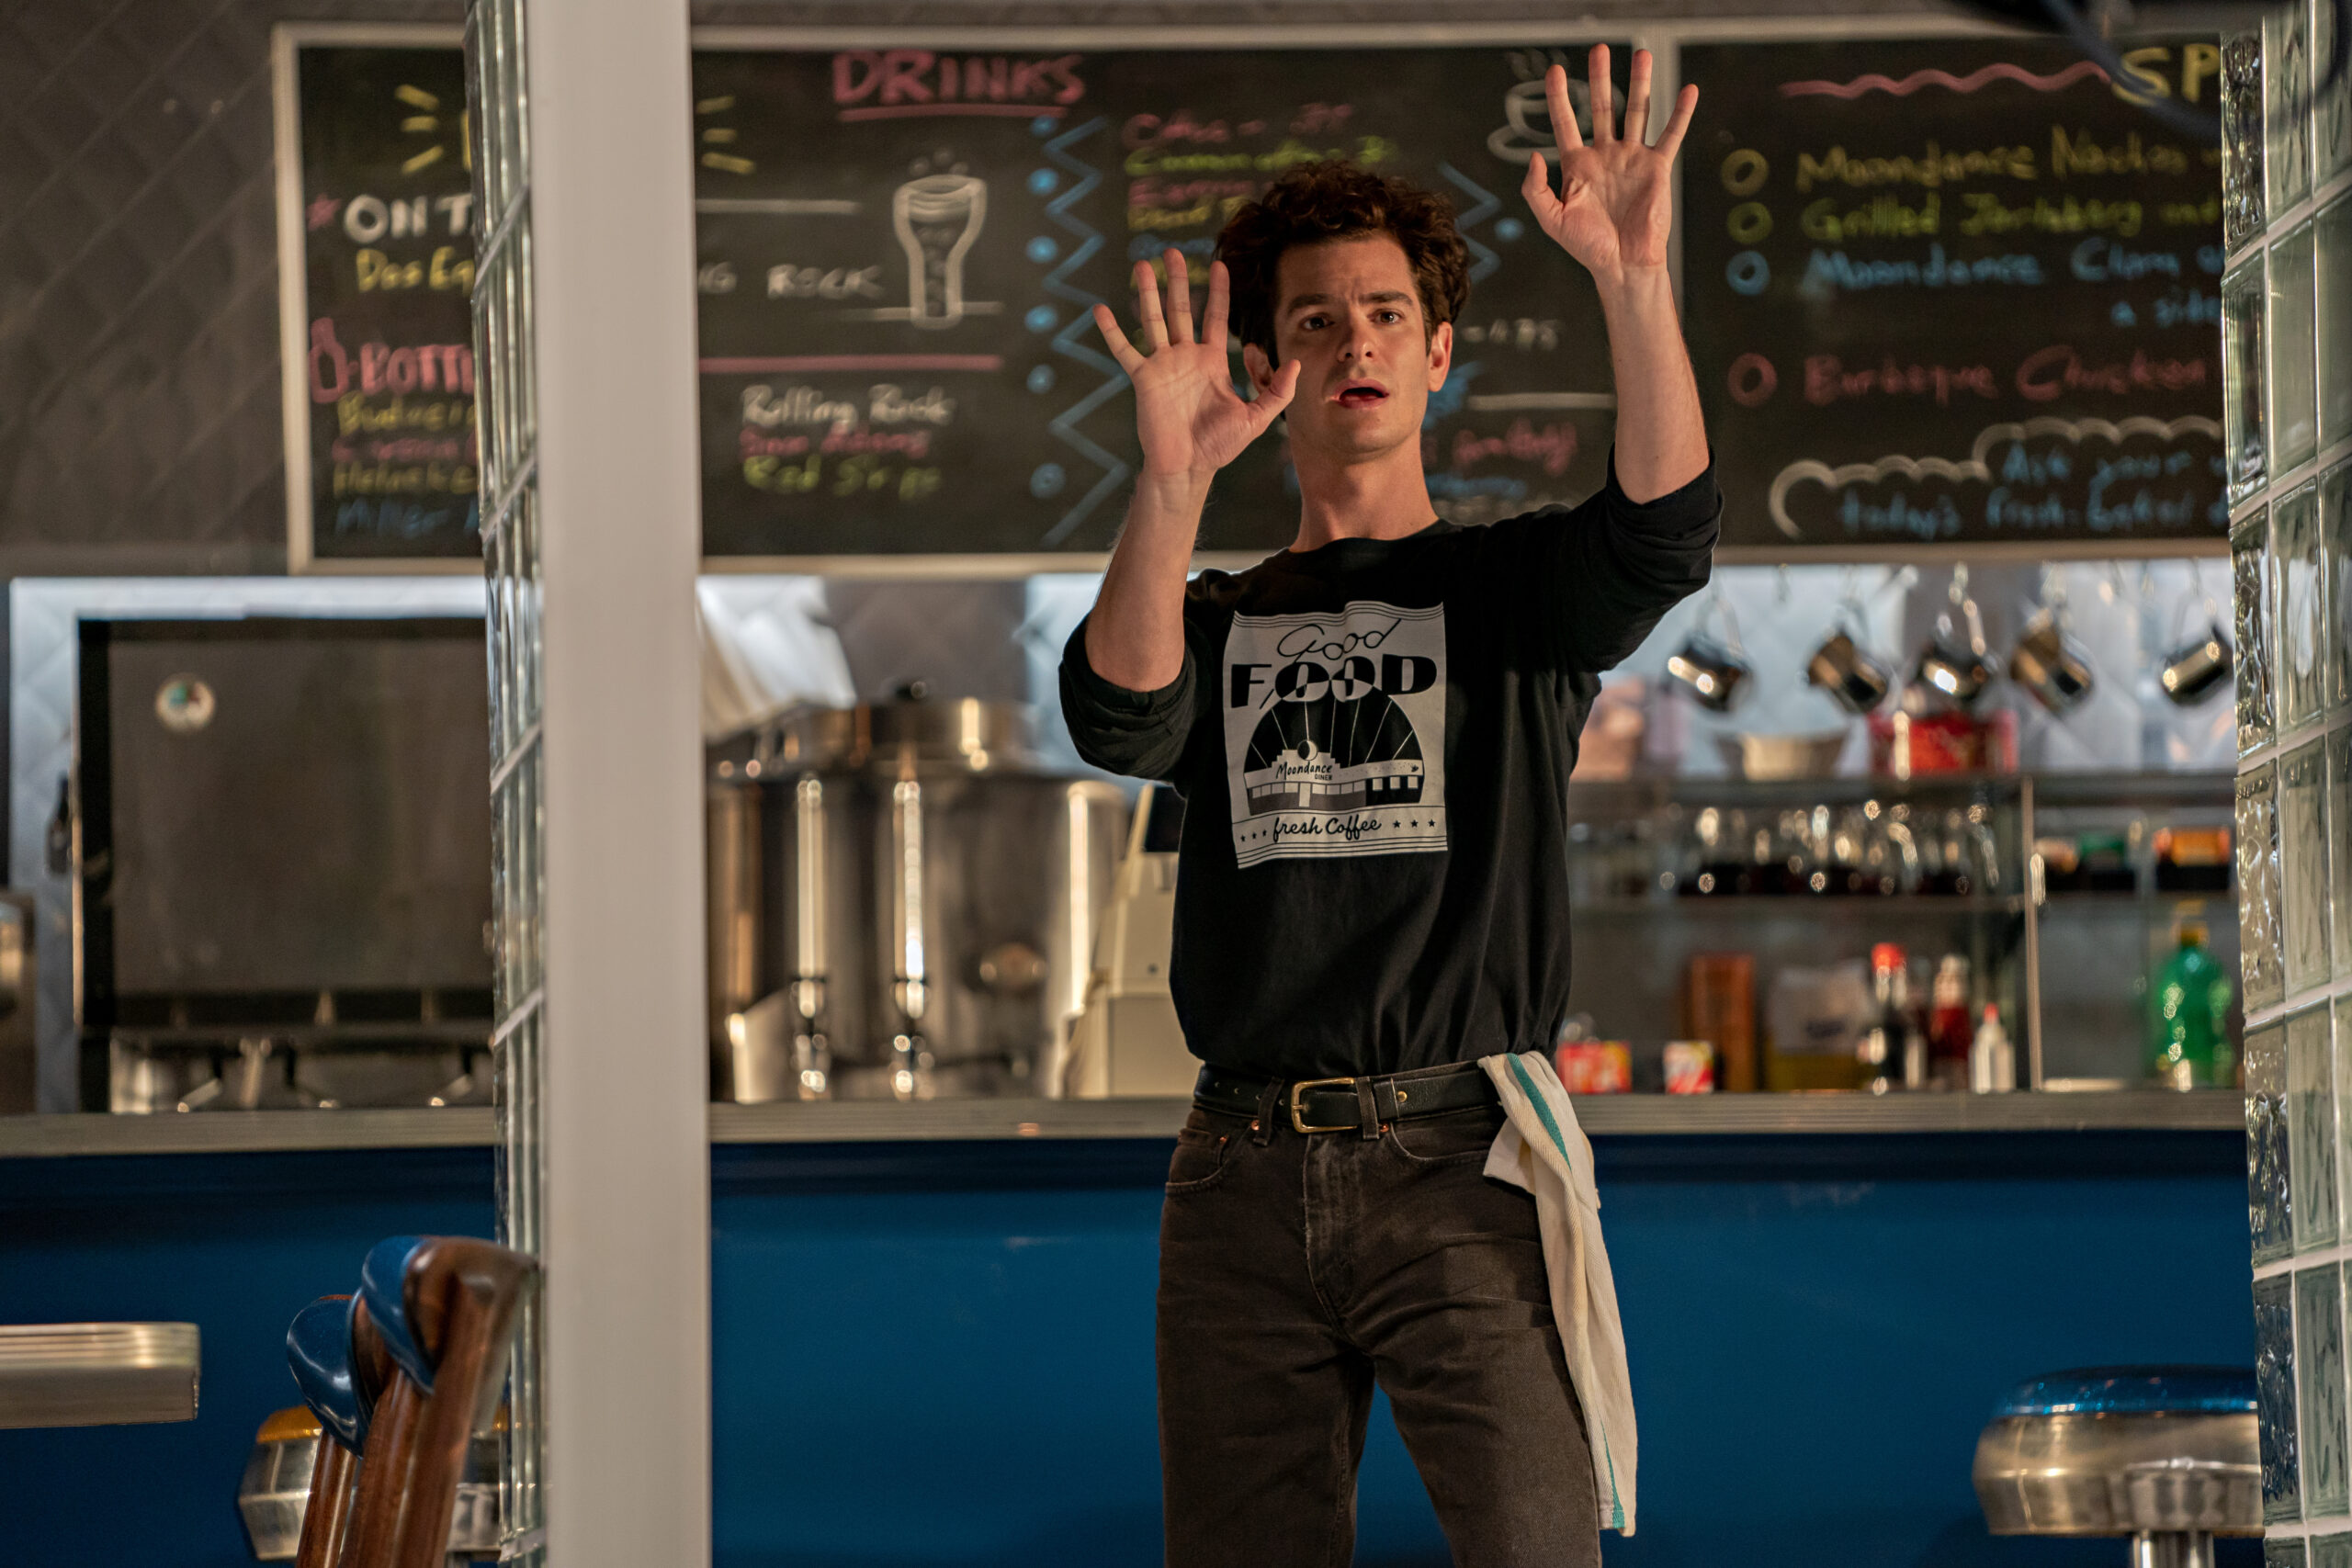 Andrew Garfield as Jonathon Larson in "Tick, Tick...Boom!" holds both hands up as if half-surrendering.